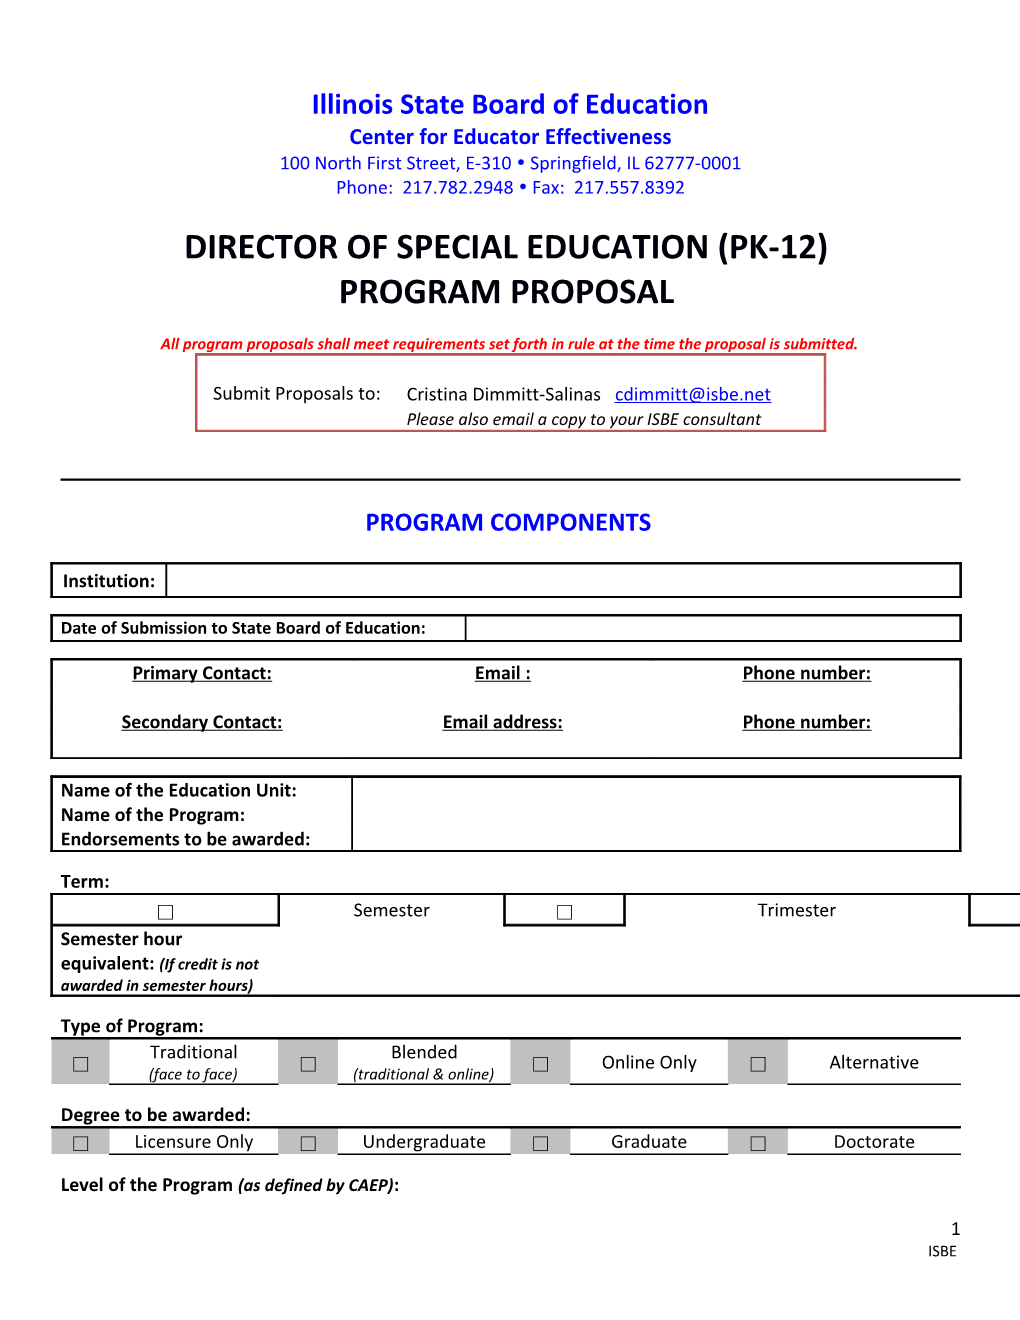 Director of Special Education (PK-12) Program Proposal